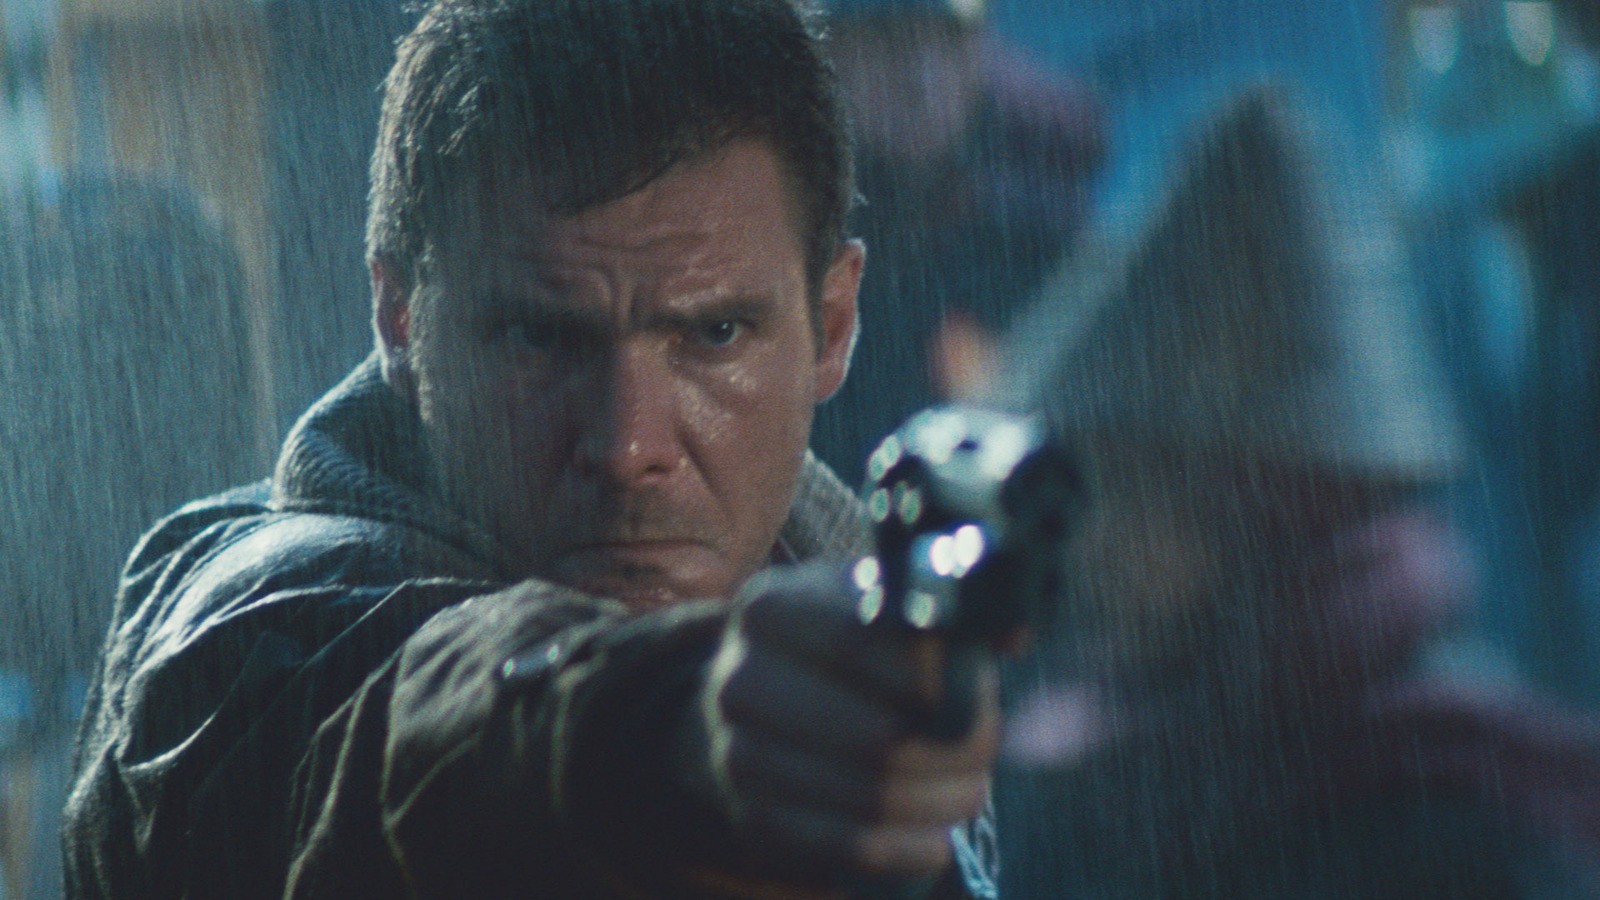 Scott Derrickson loved the theatrical cut of Harrison Ford's Blade Runner